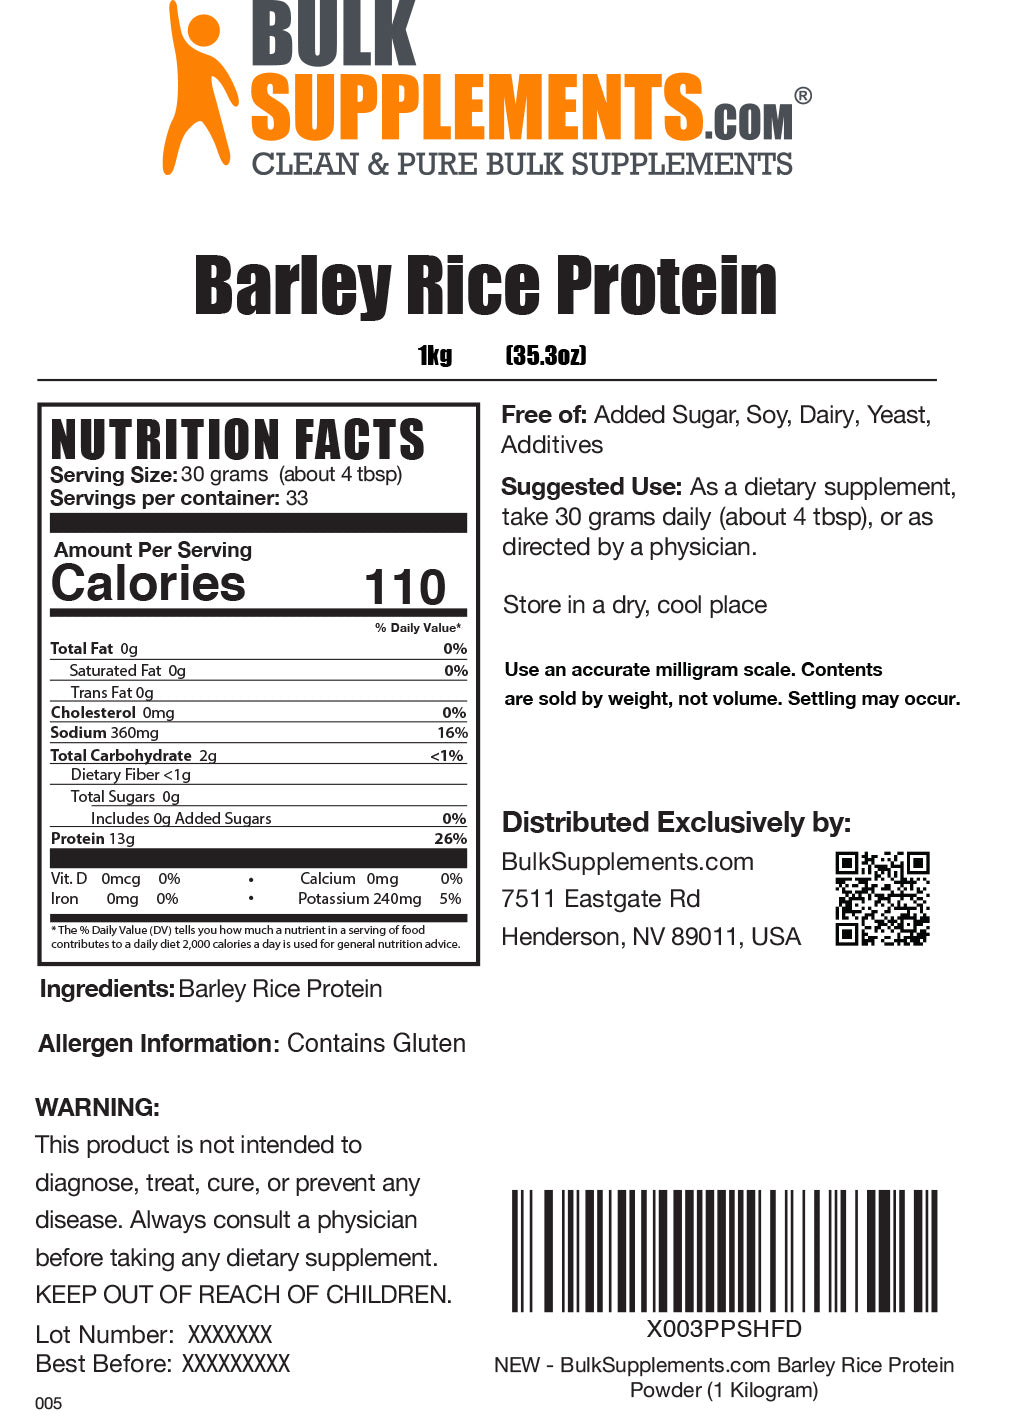 Barley rice protein powder label 1kg